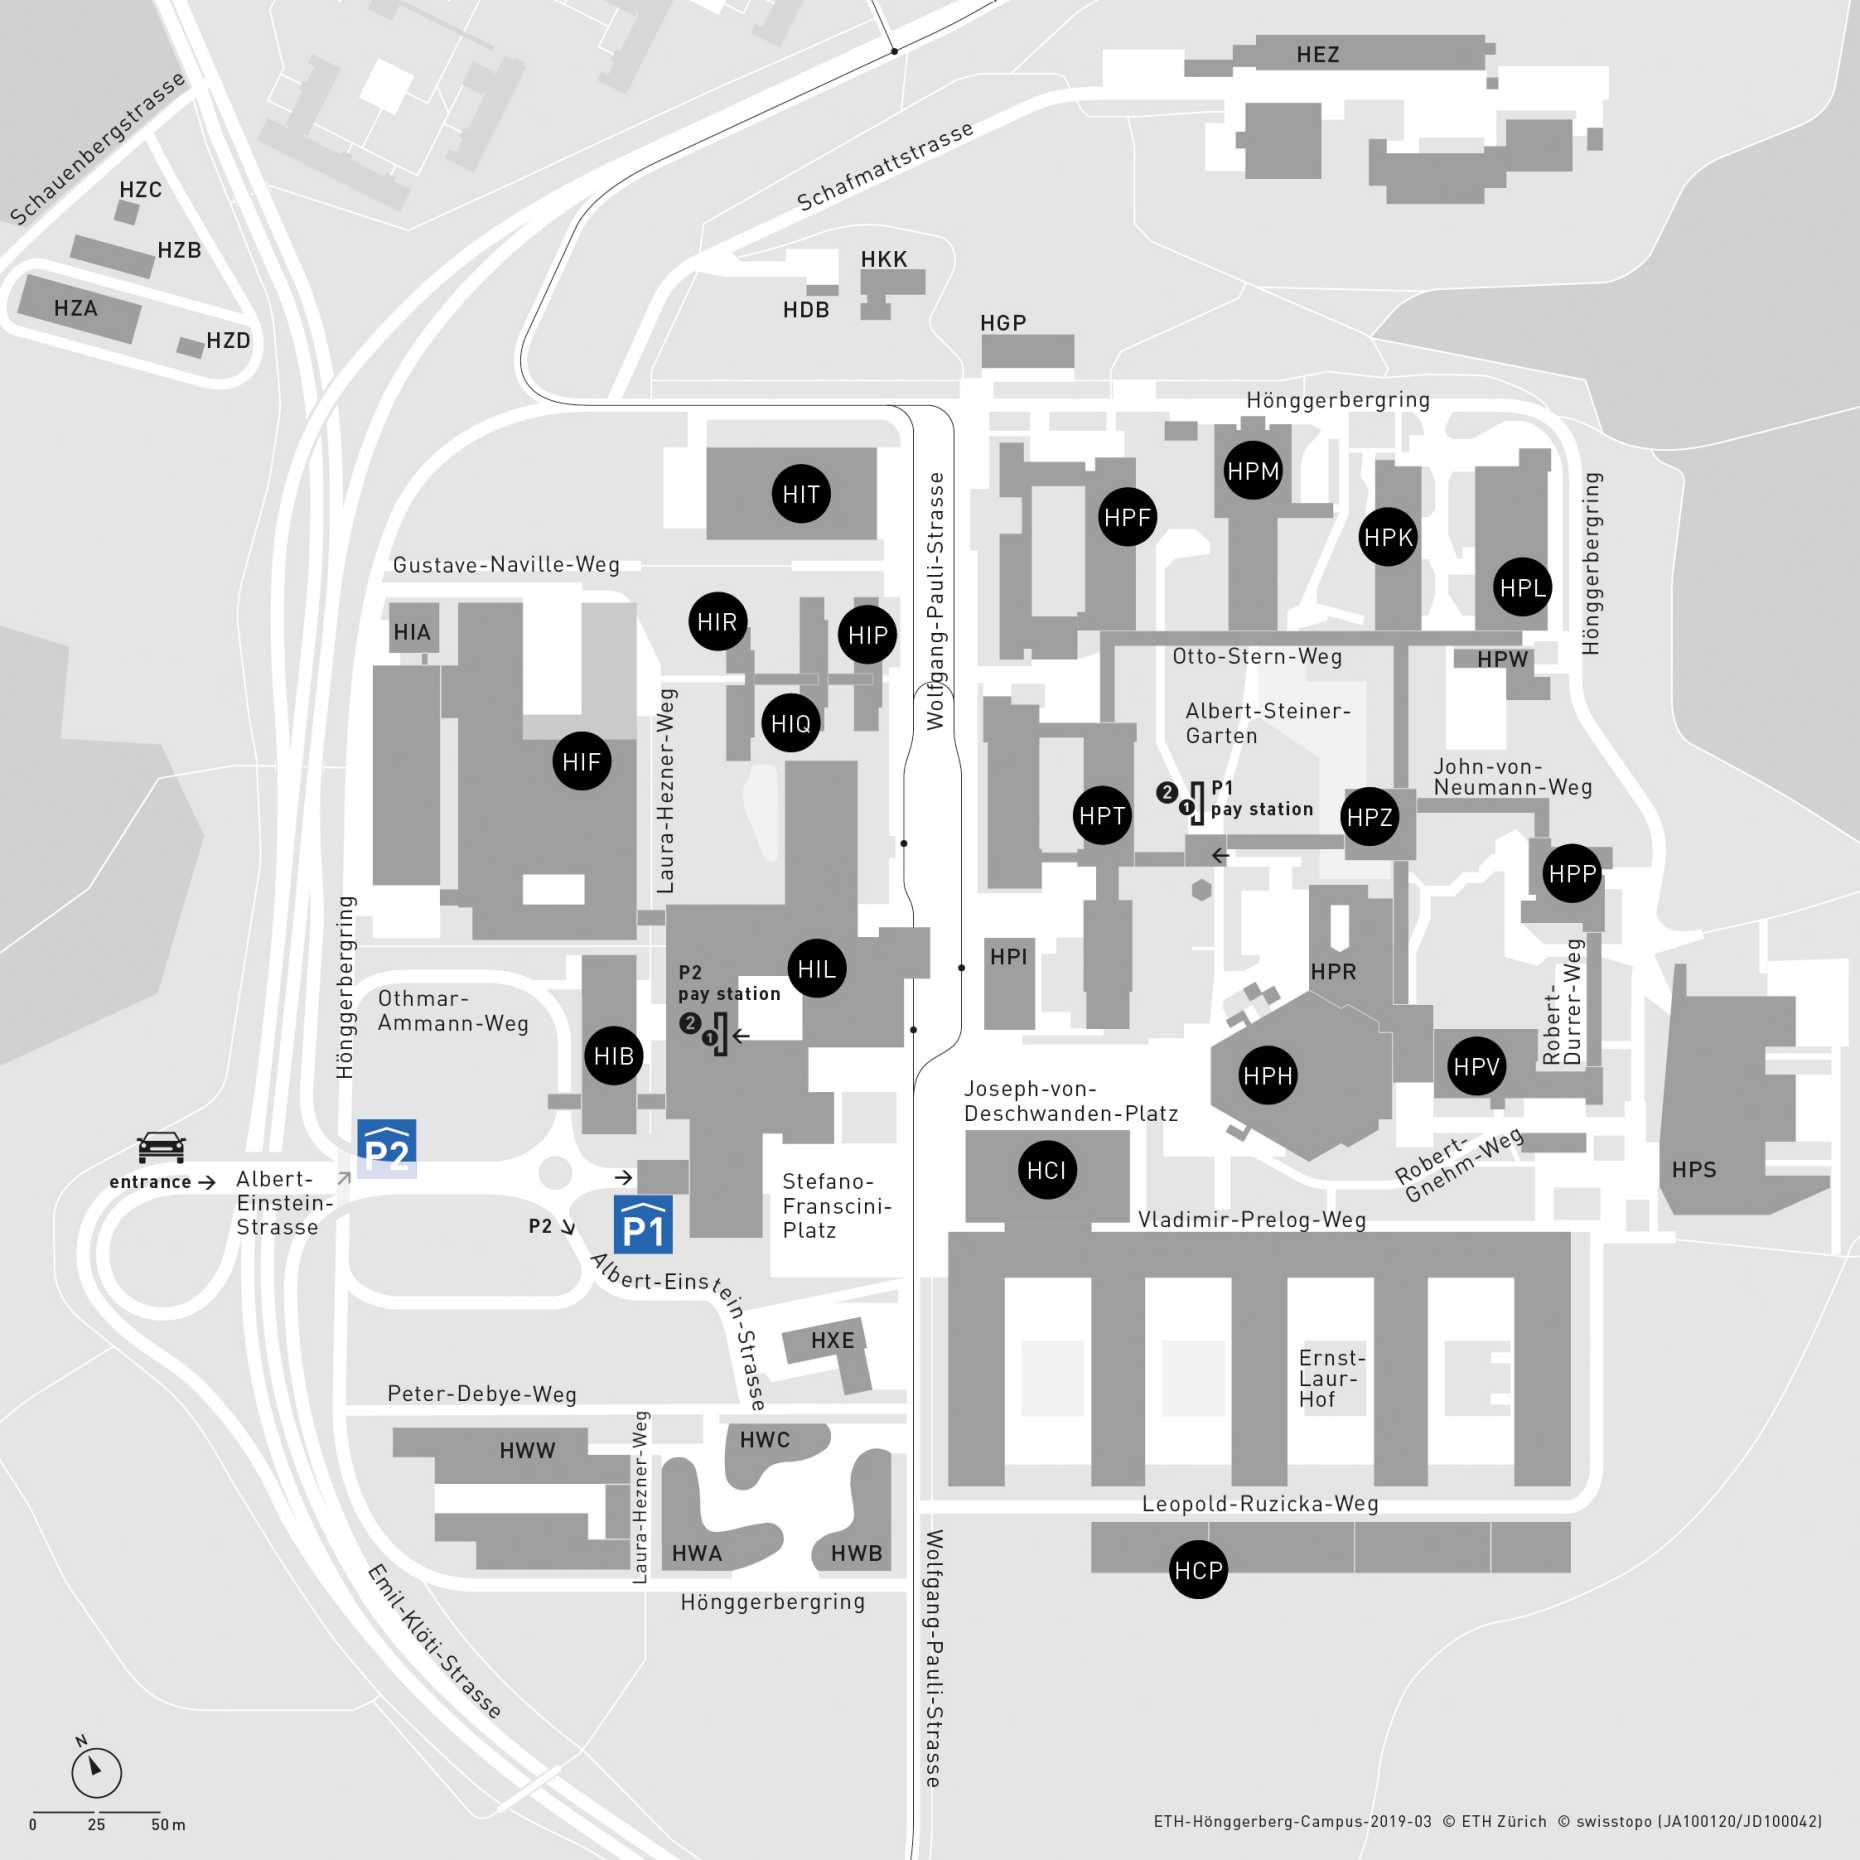 Enlarged view: Site map Hönggerberg campus